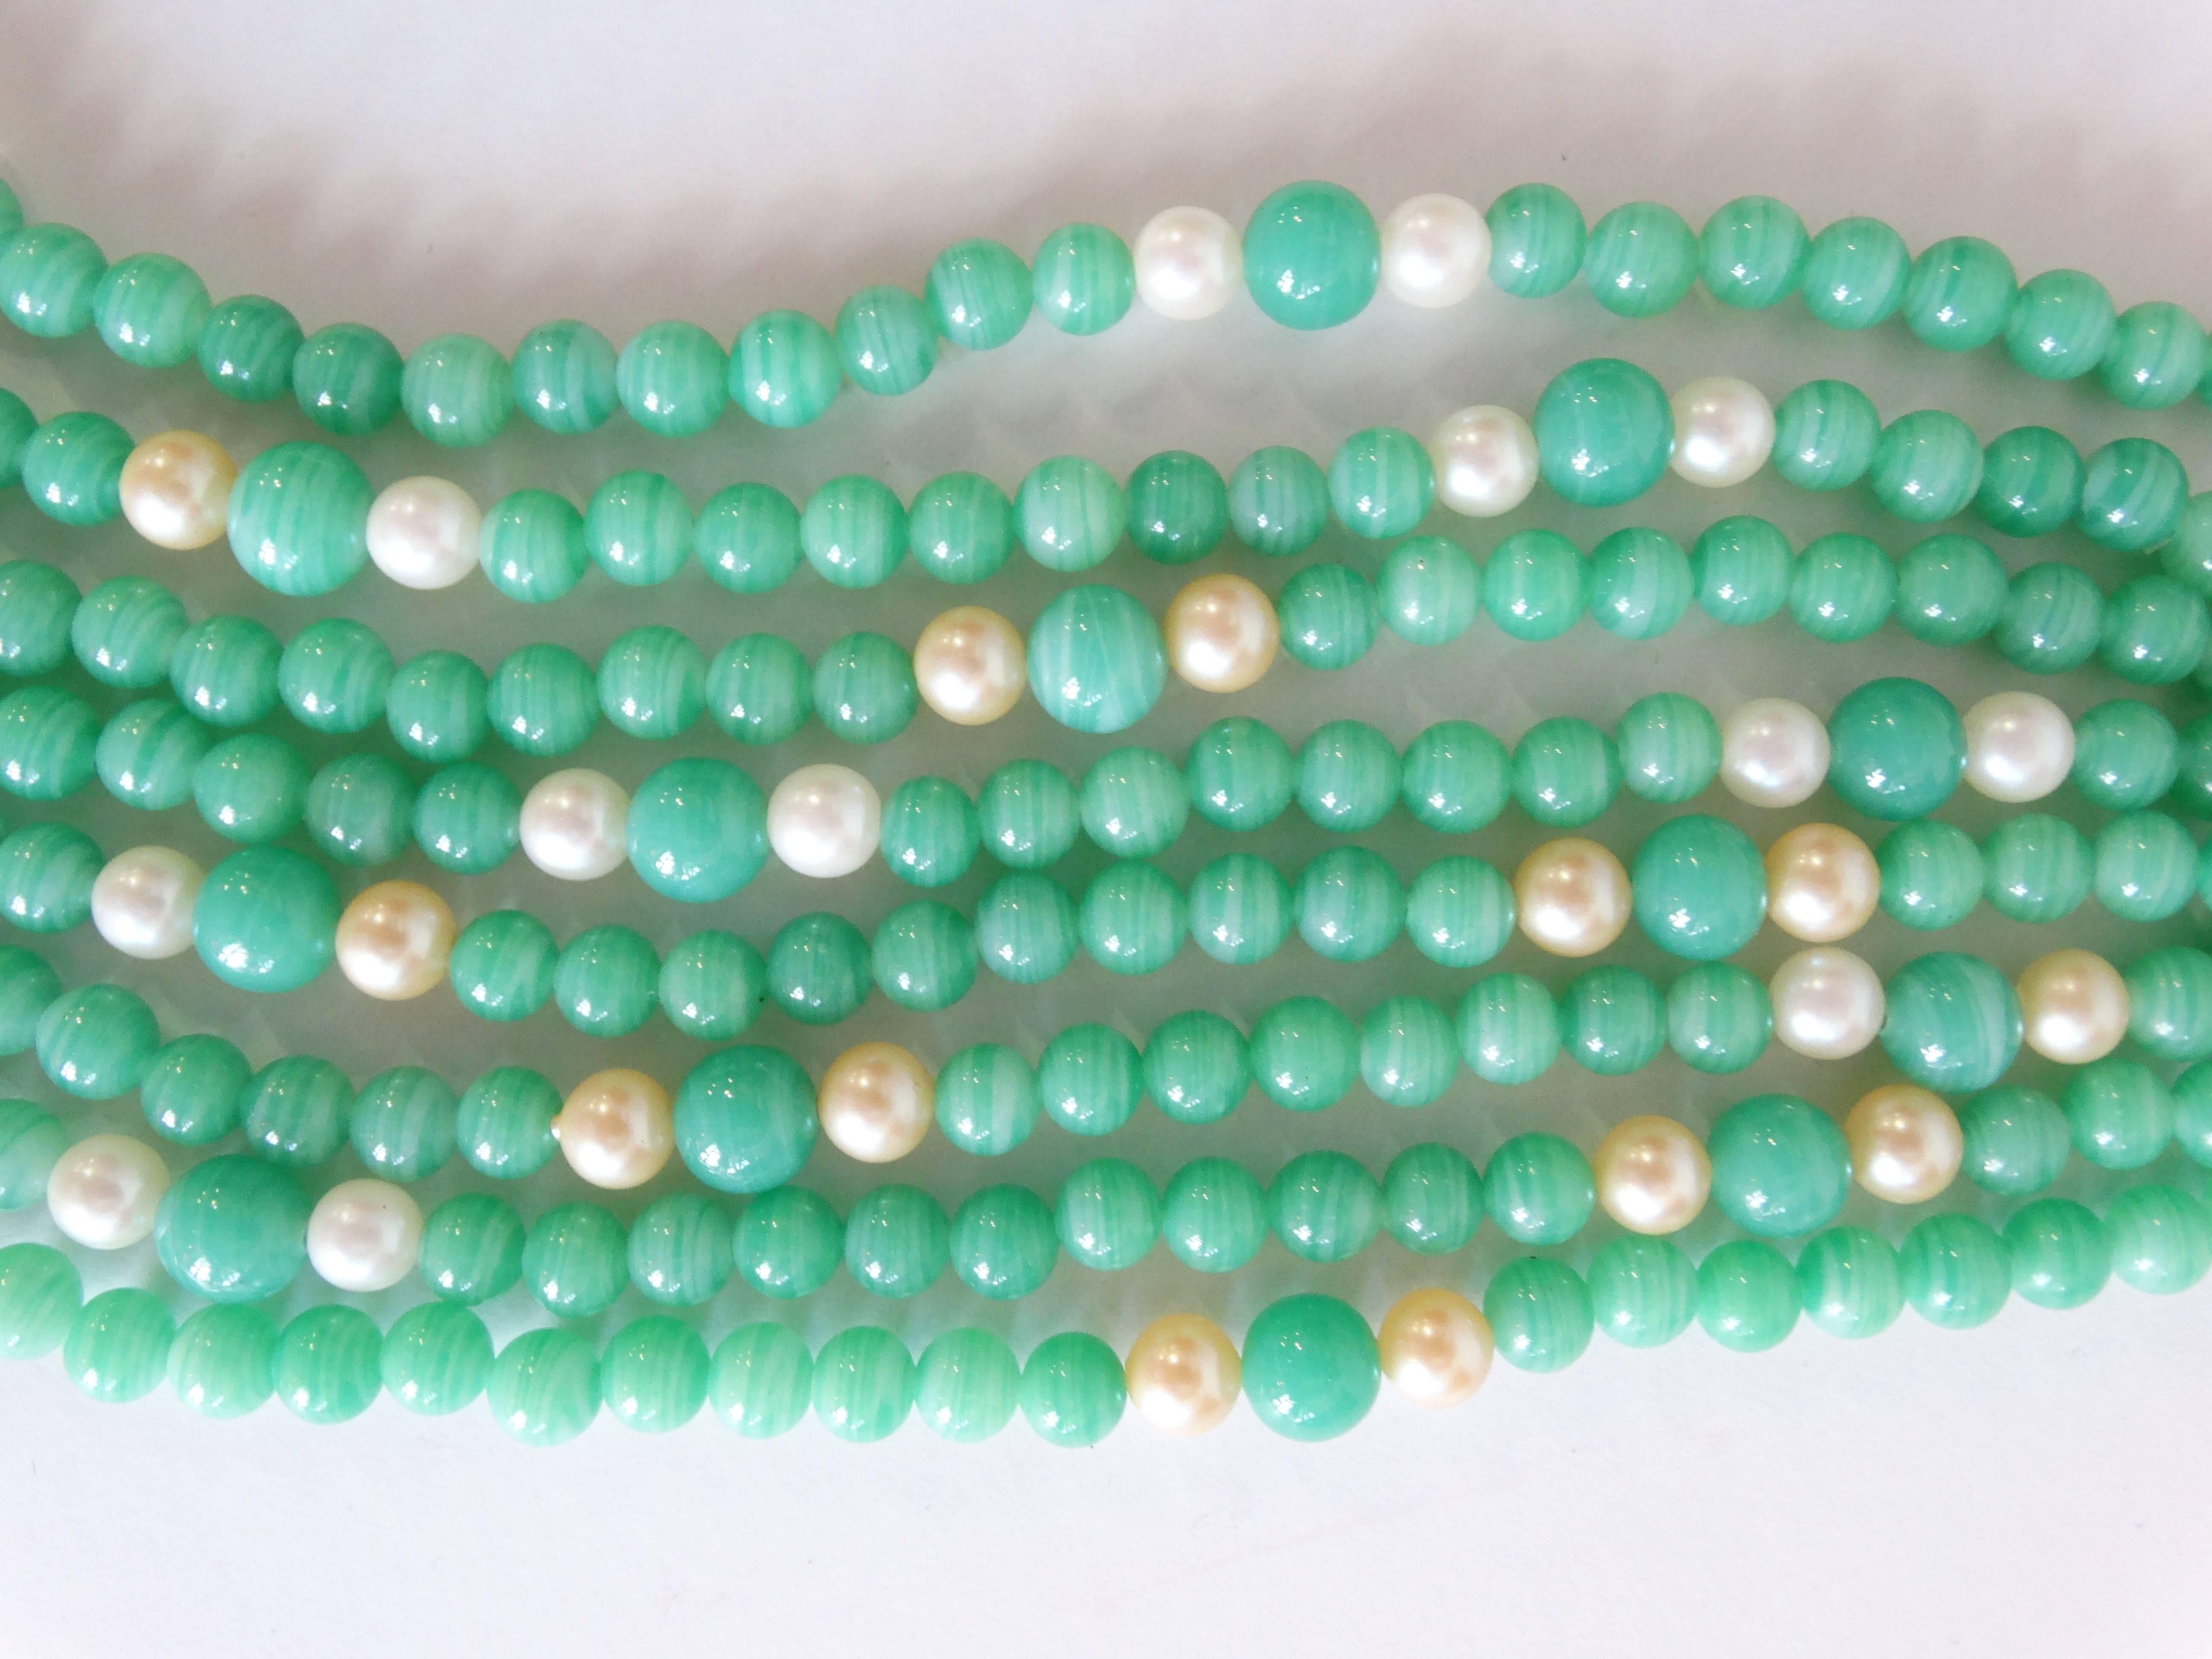 1970s Multi Strand Jade and Faux Pearls created by William de Lillo 2